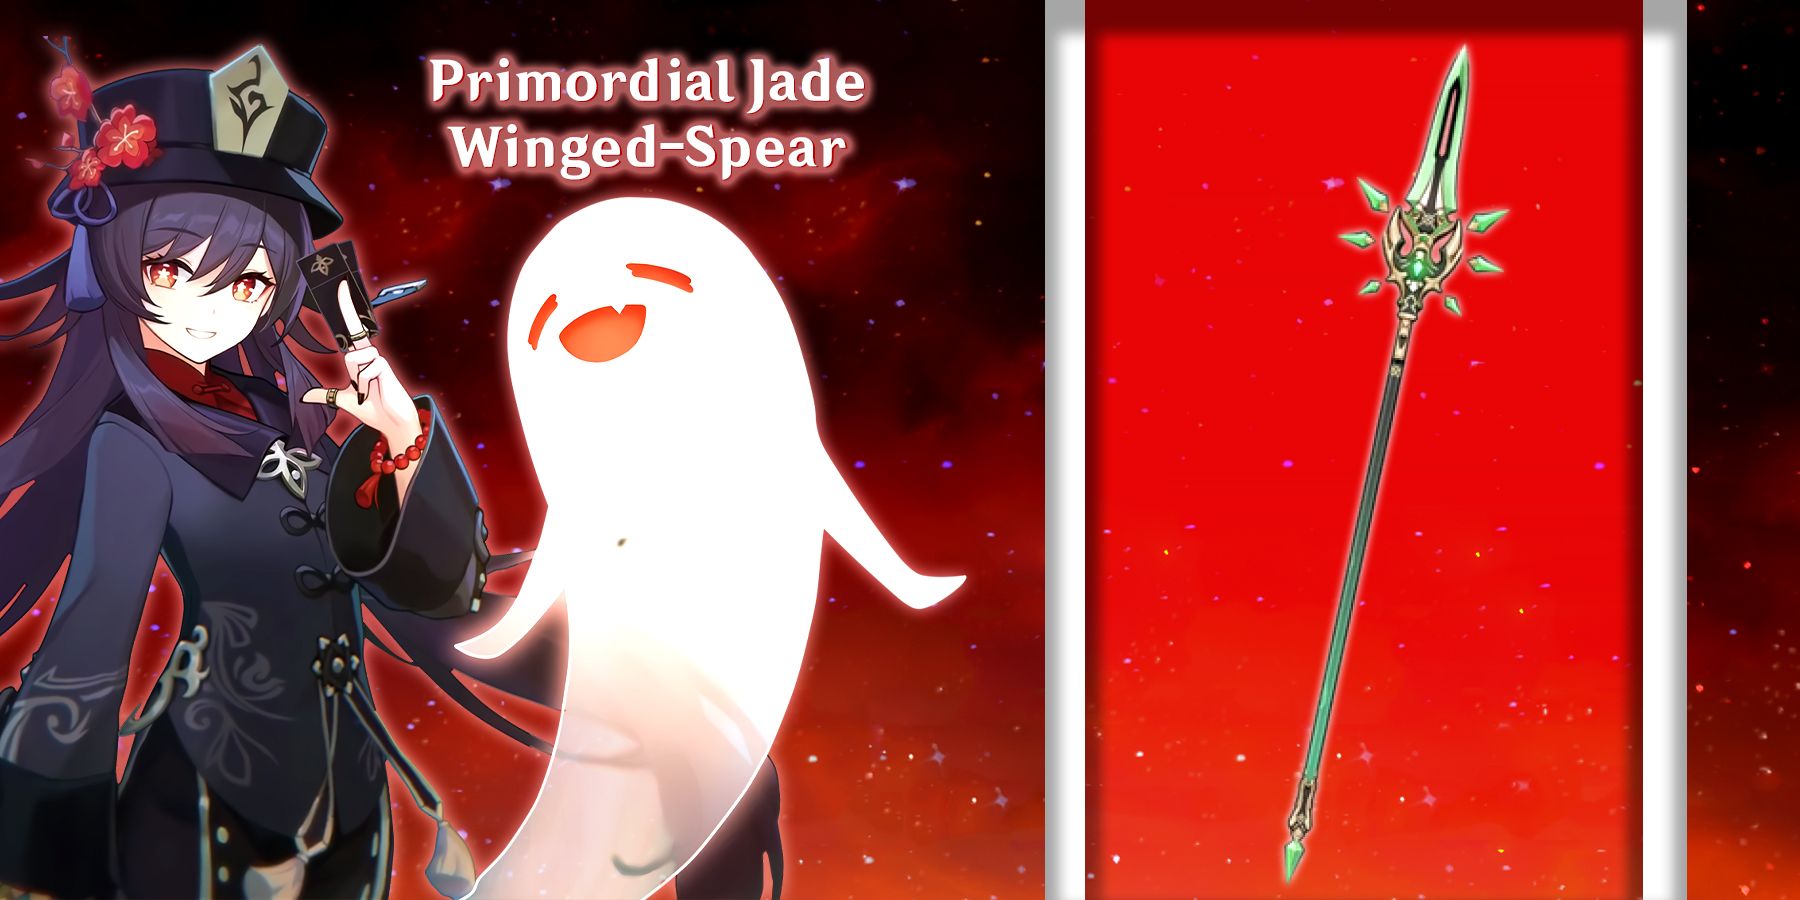 hu tao using primordial jade winged spear in genshin impact